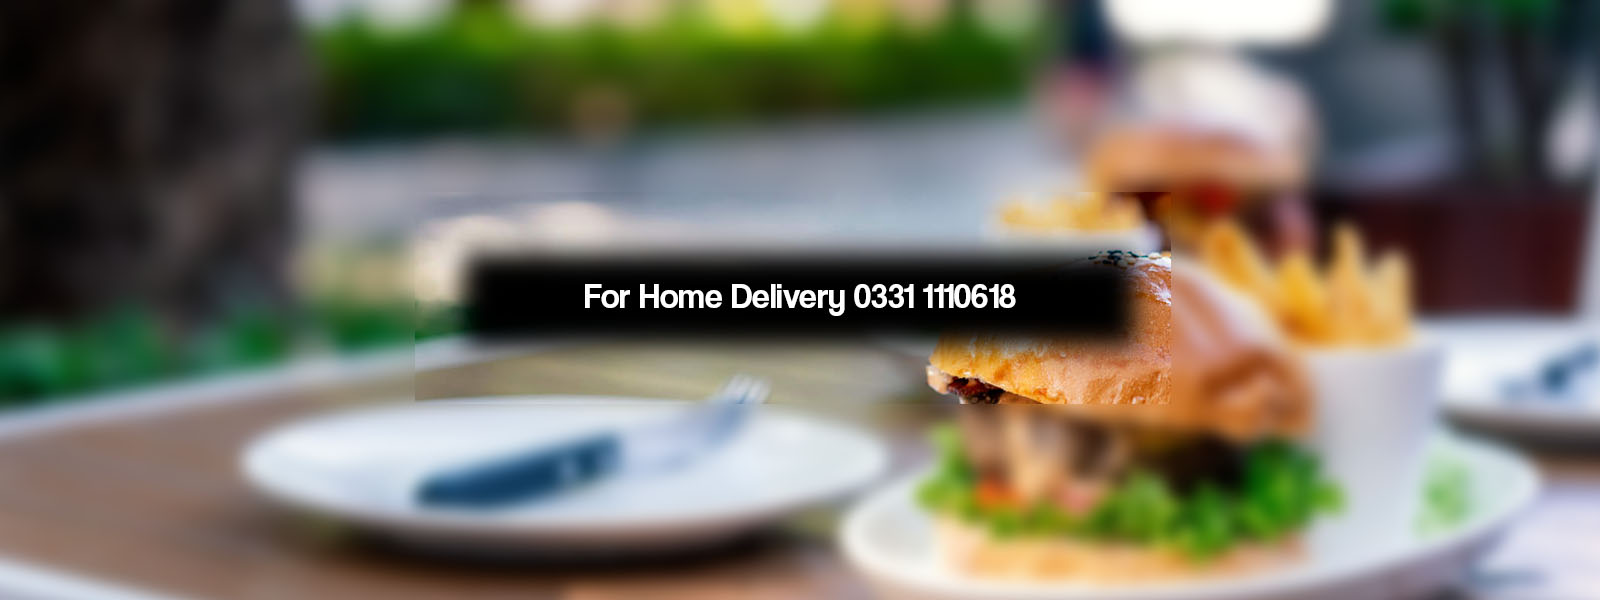 hamza-burgers-lahore-to-order-call-0331-1110618